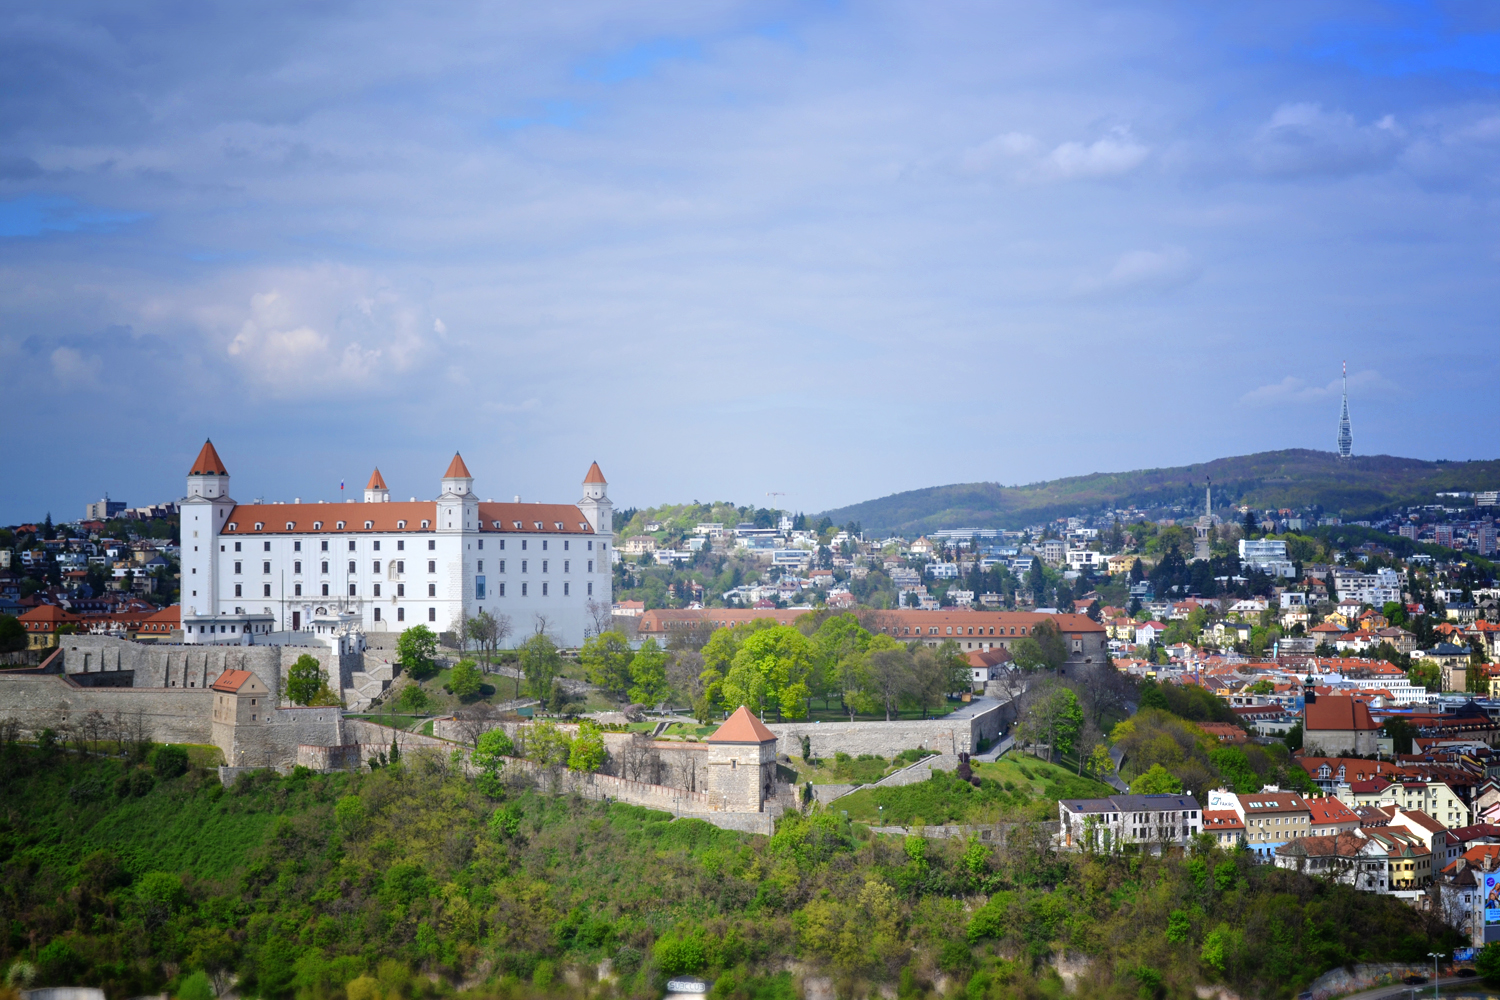 View of Hrad Castle, Bratislava